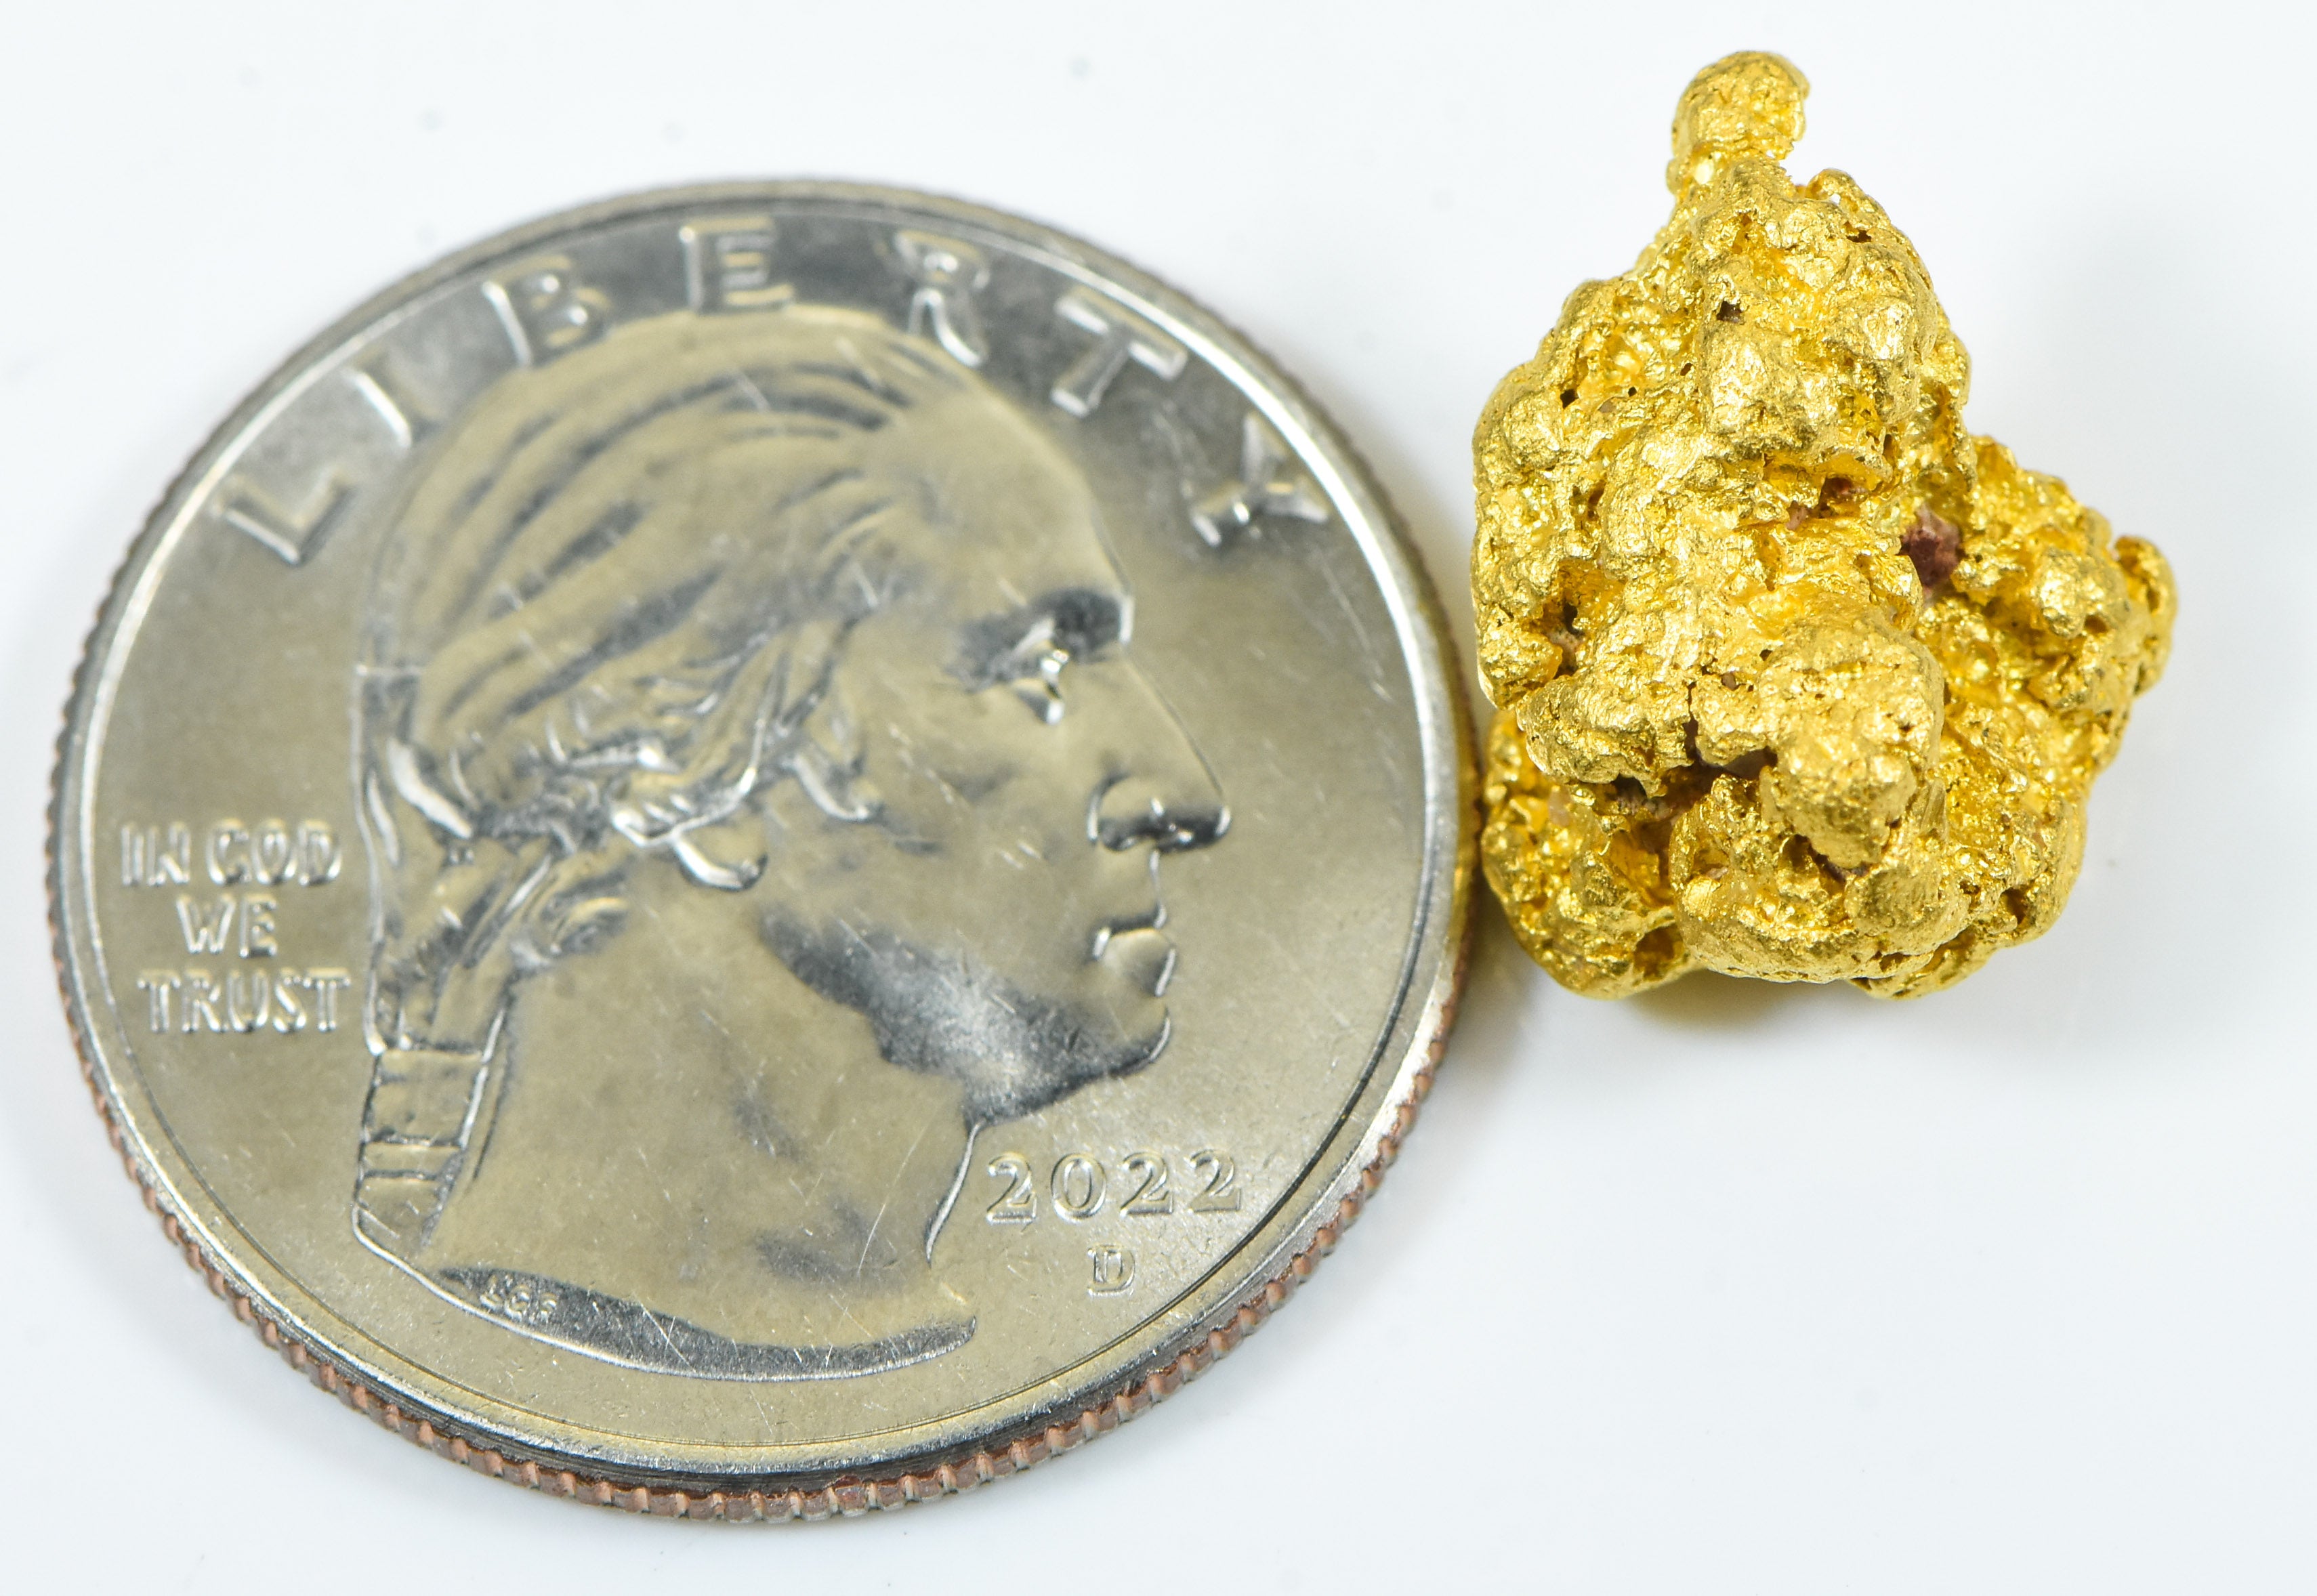 #1122 Natural Gold Nugget Australian 5.78 Grams Genuine